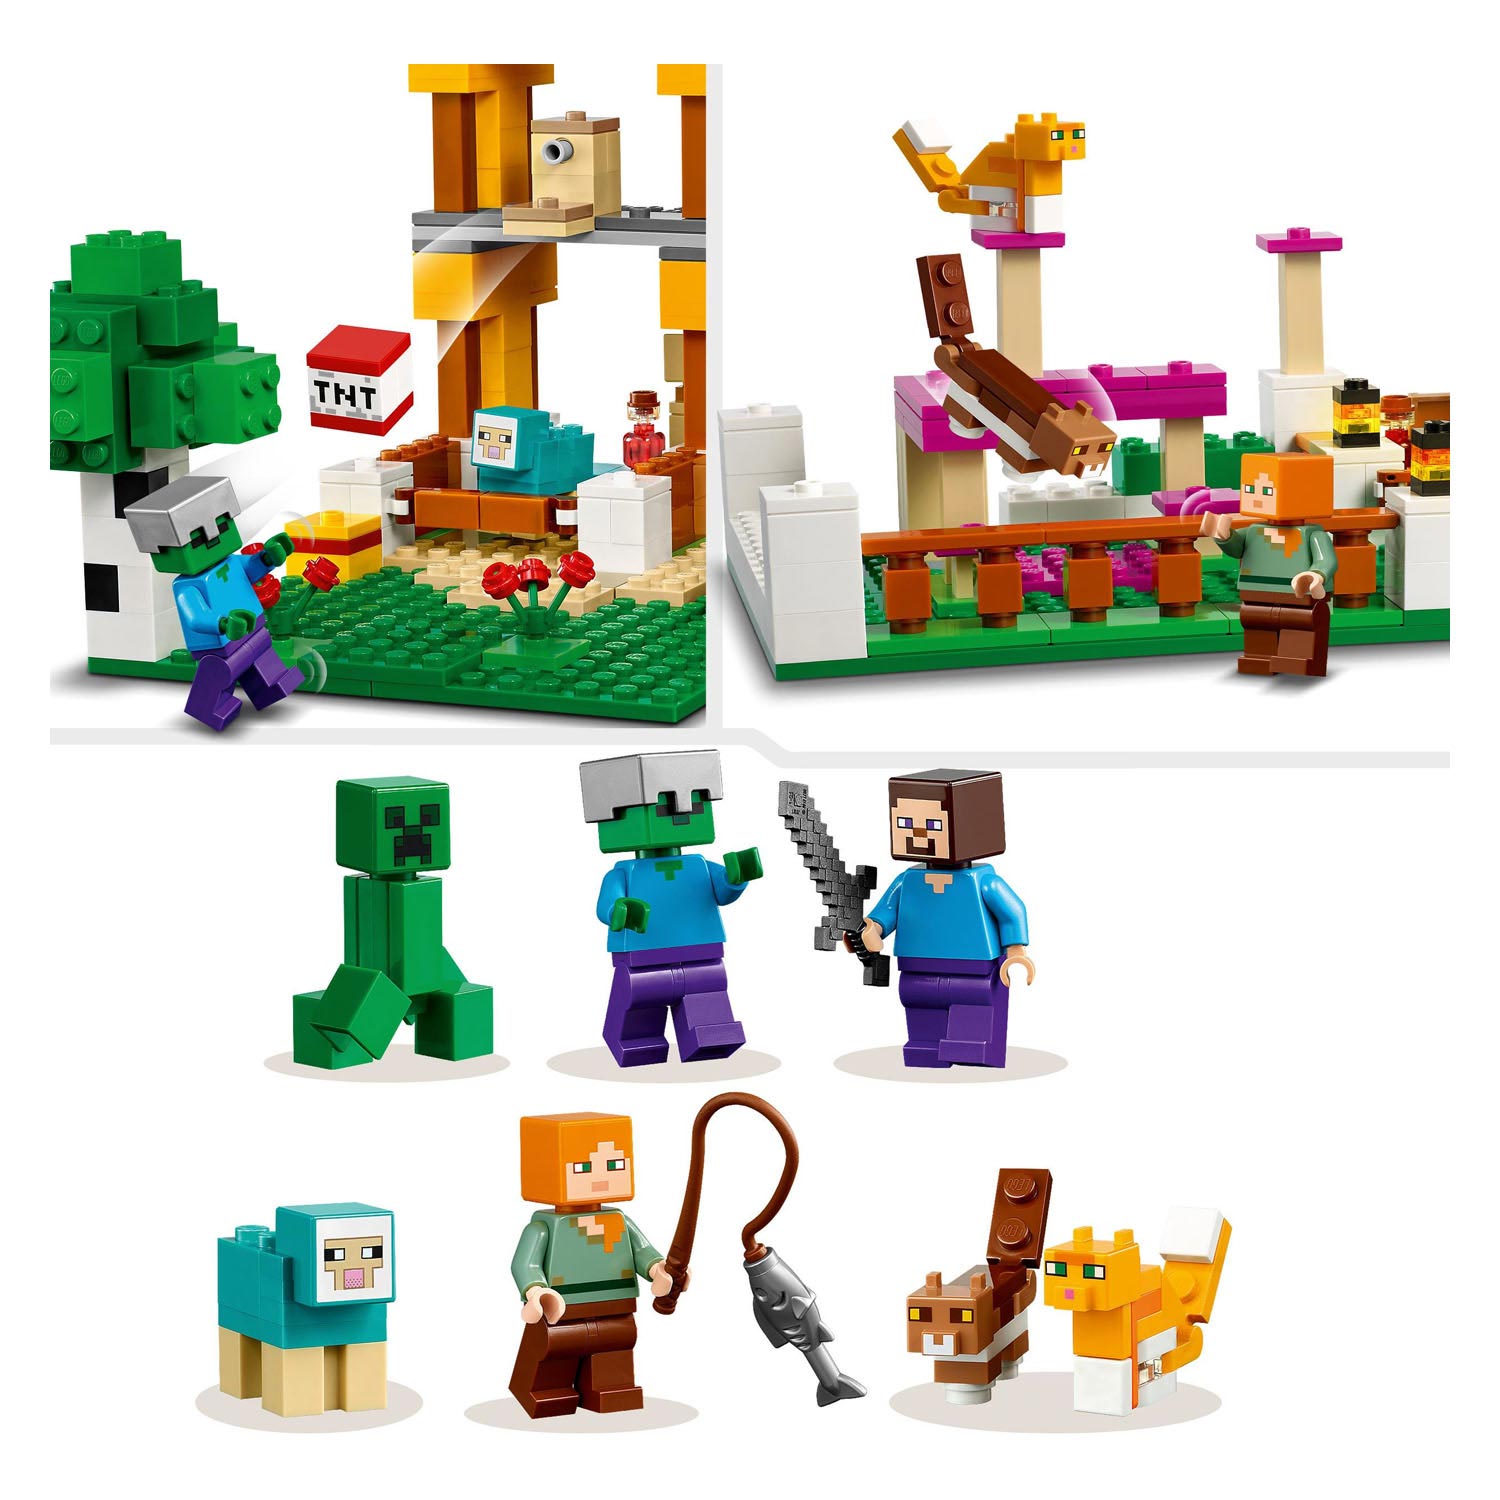 21249 LEGO Minecraft La boîte d'artisanat 4.0